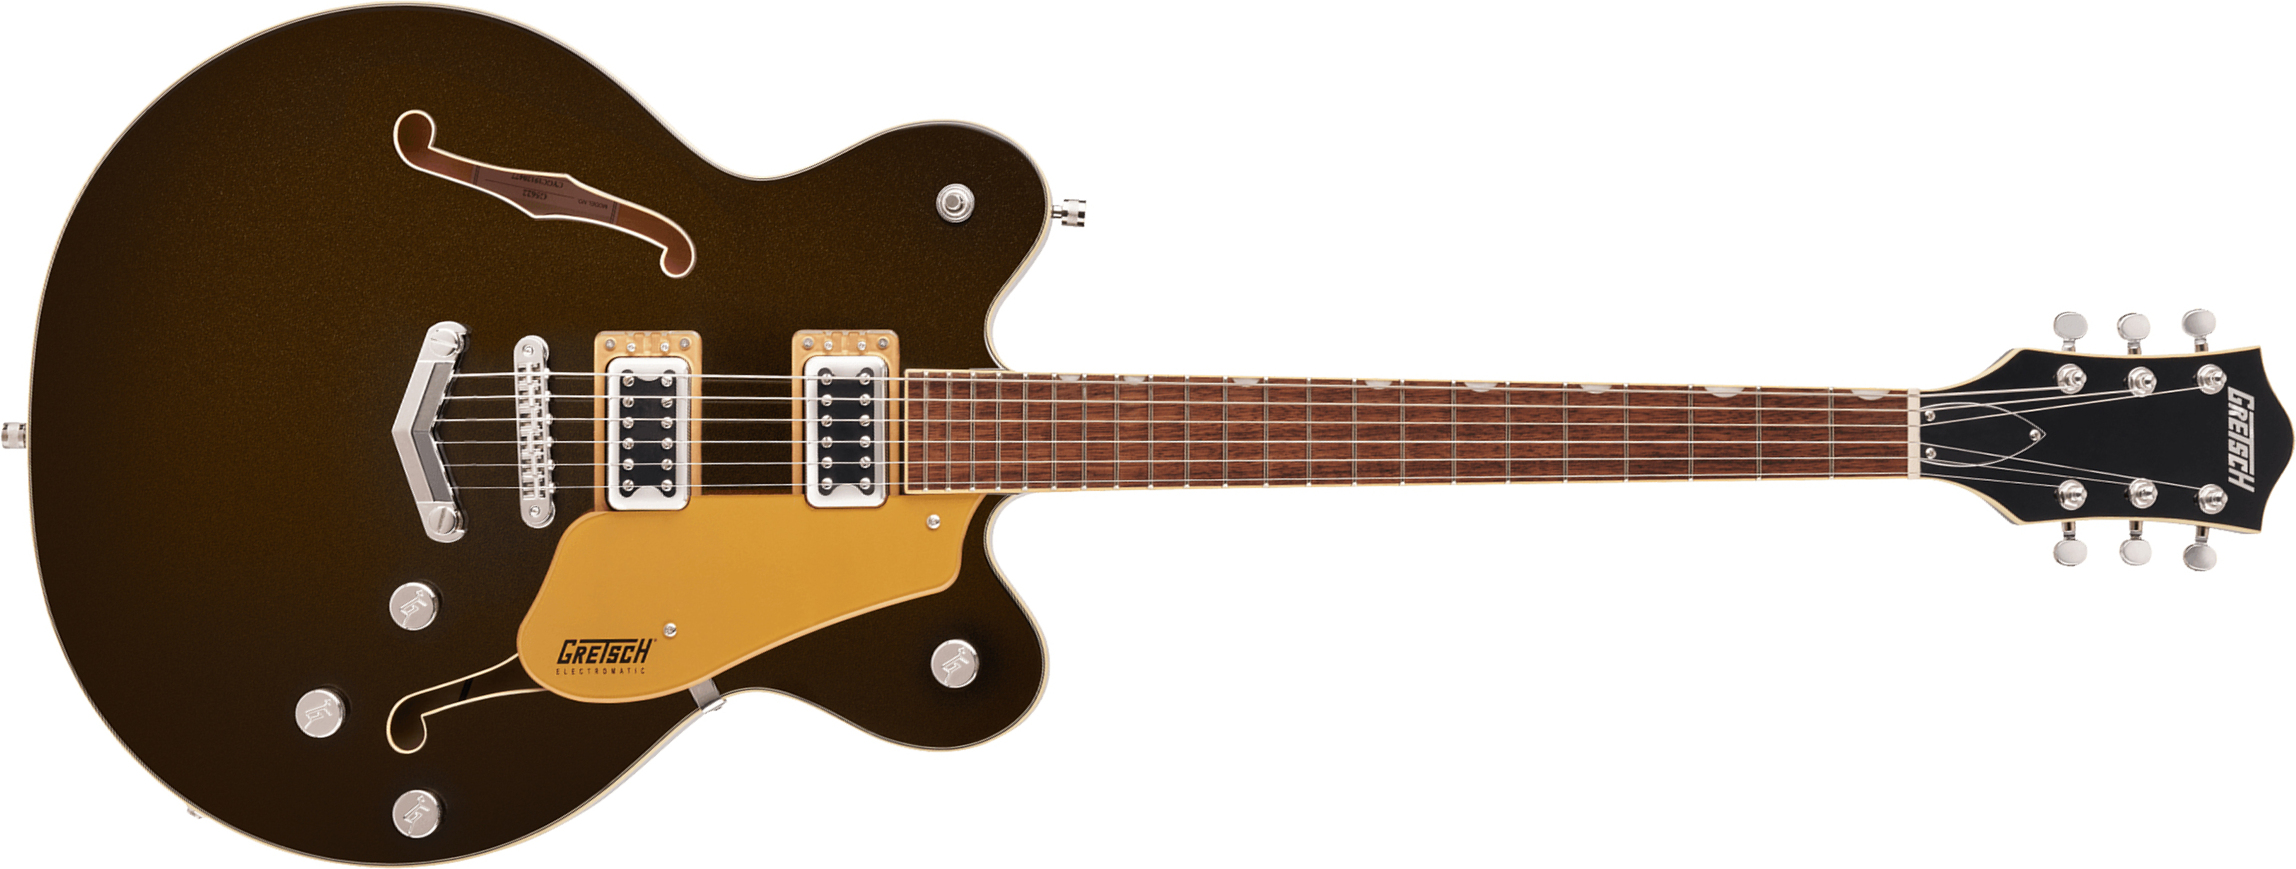 Gretsch G5622 Center Bloc Double Cut V-stoptail Electromatic Hh Ht Lau - Black Gold - Semi-hollow electric guitar - Main picture